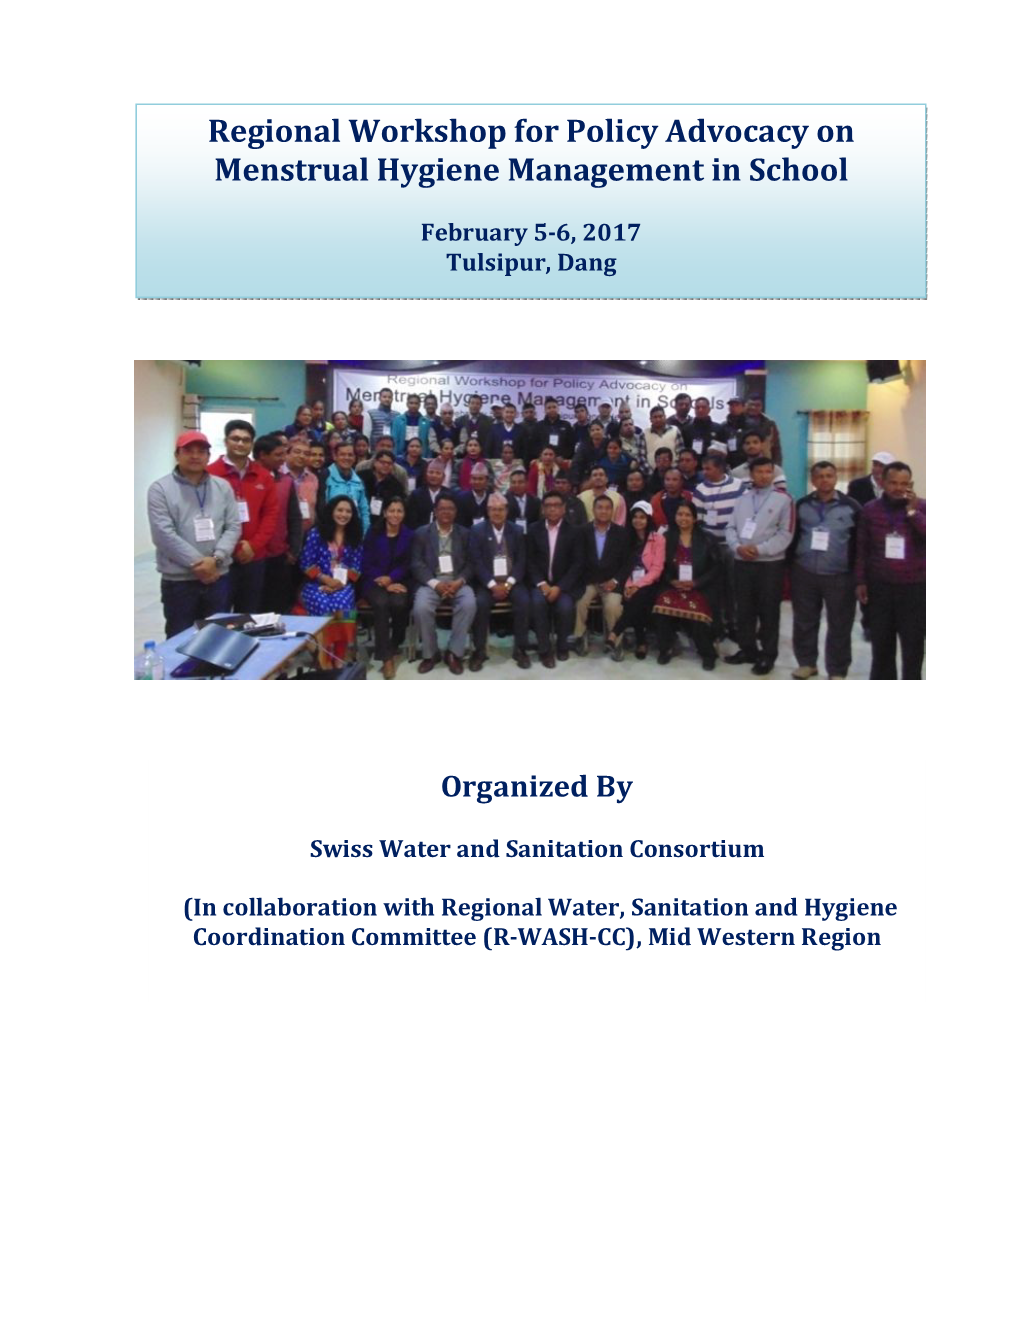 Regional Workshop for Policy Advocacy on Menstrual Hygiene